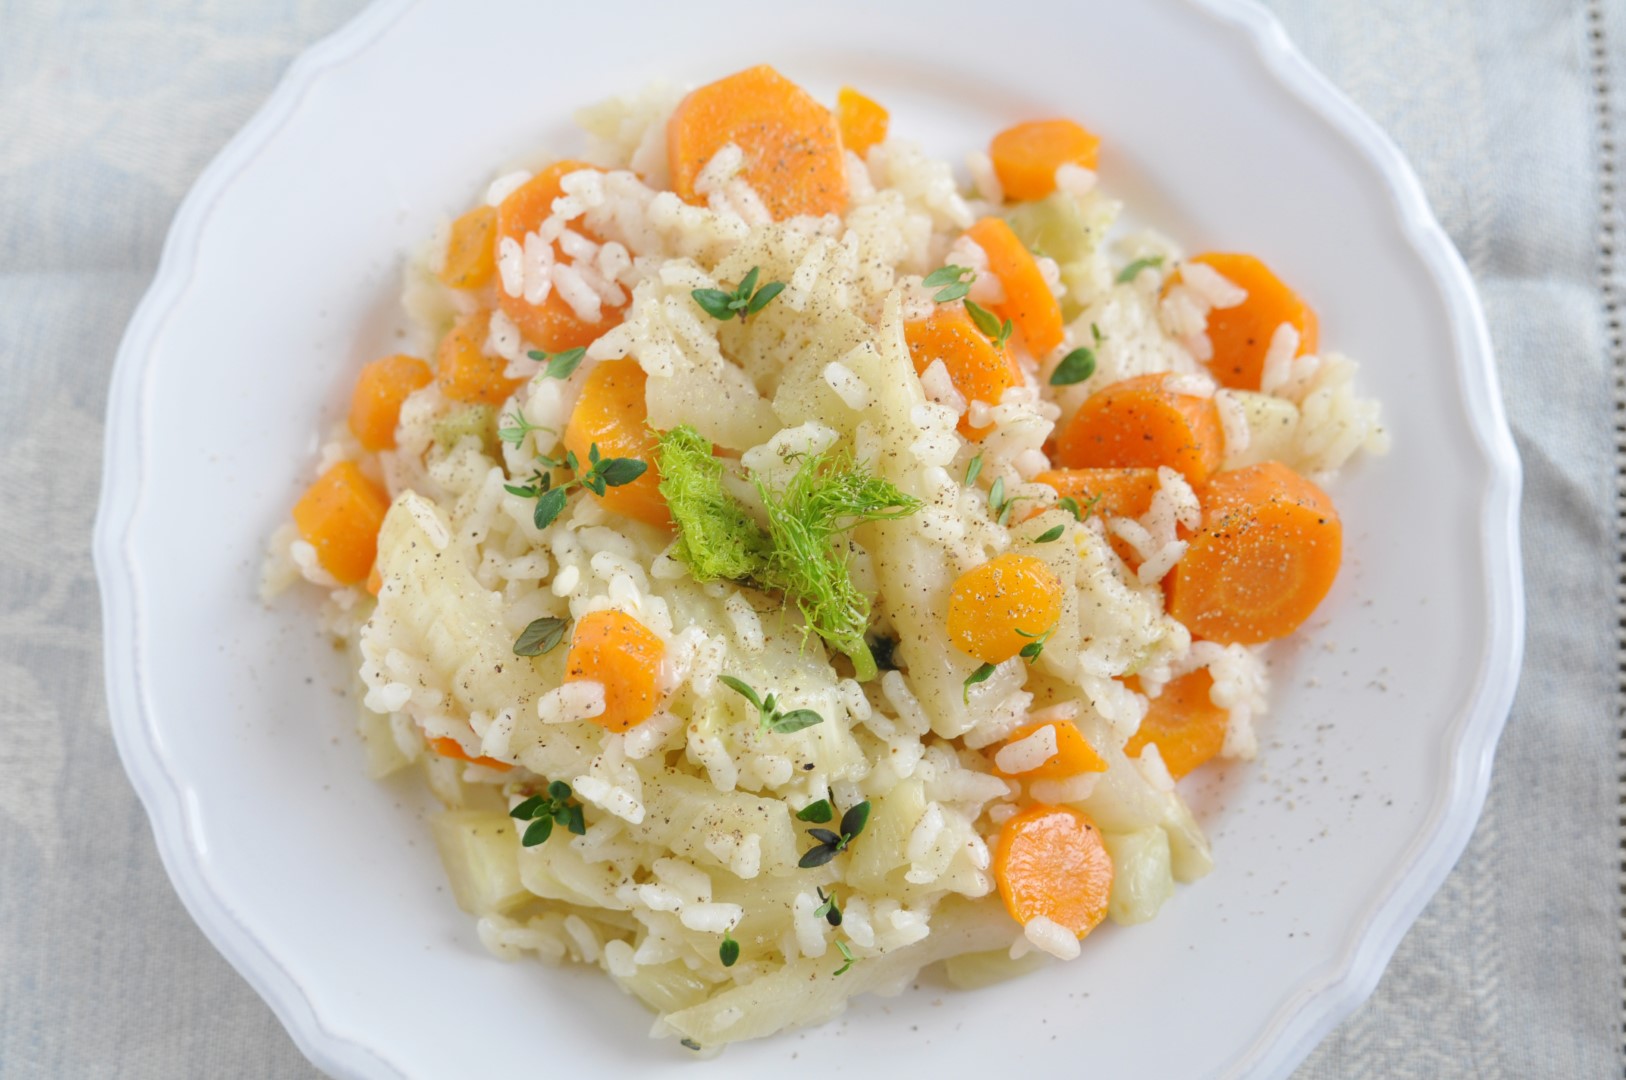 risotto aux carottes et curcuma